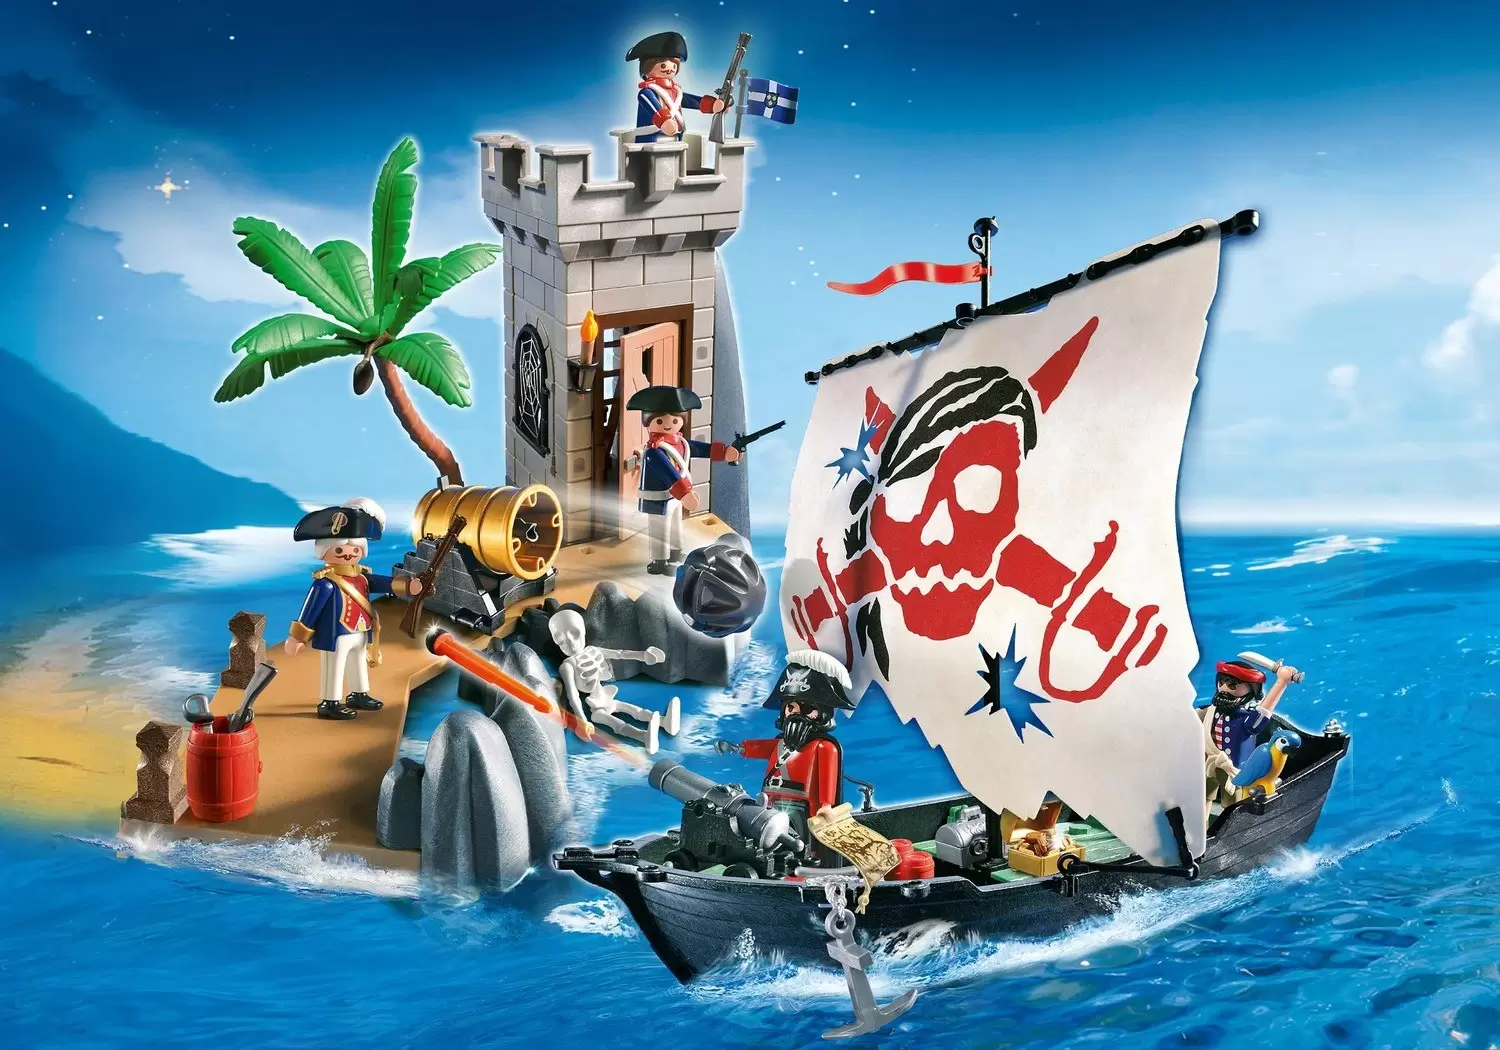 Pirate Playmobil - pirate bastion set